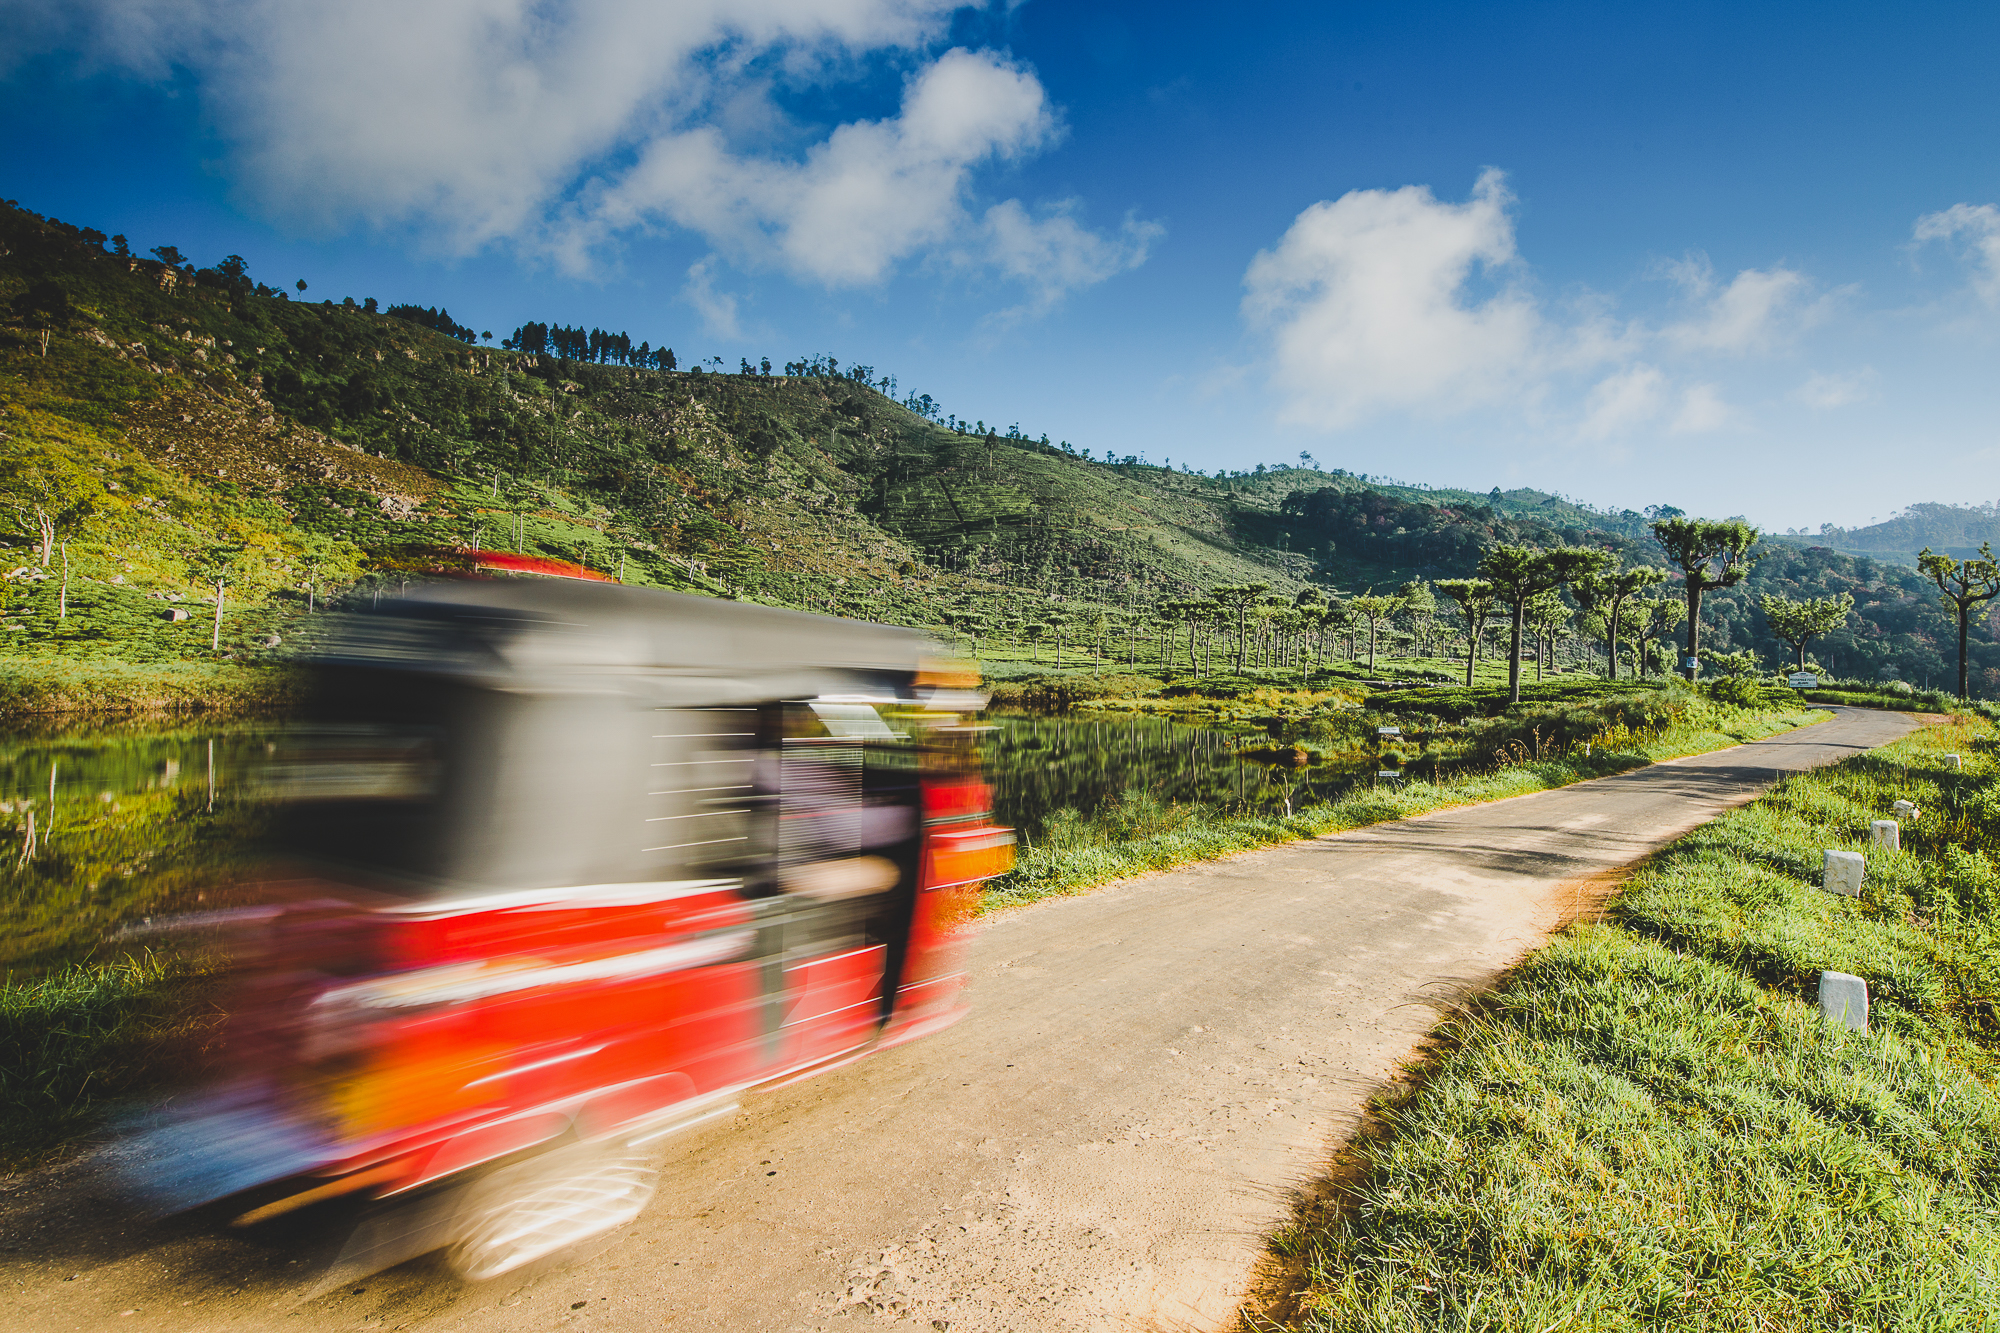 Tuk Tuk speeding through the roads of Sri Lanka